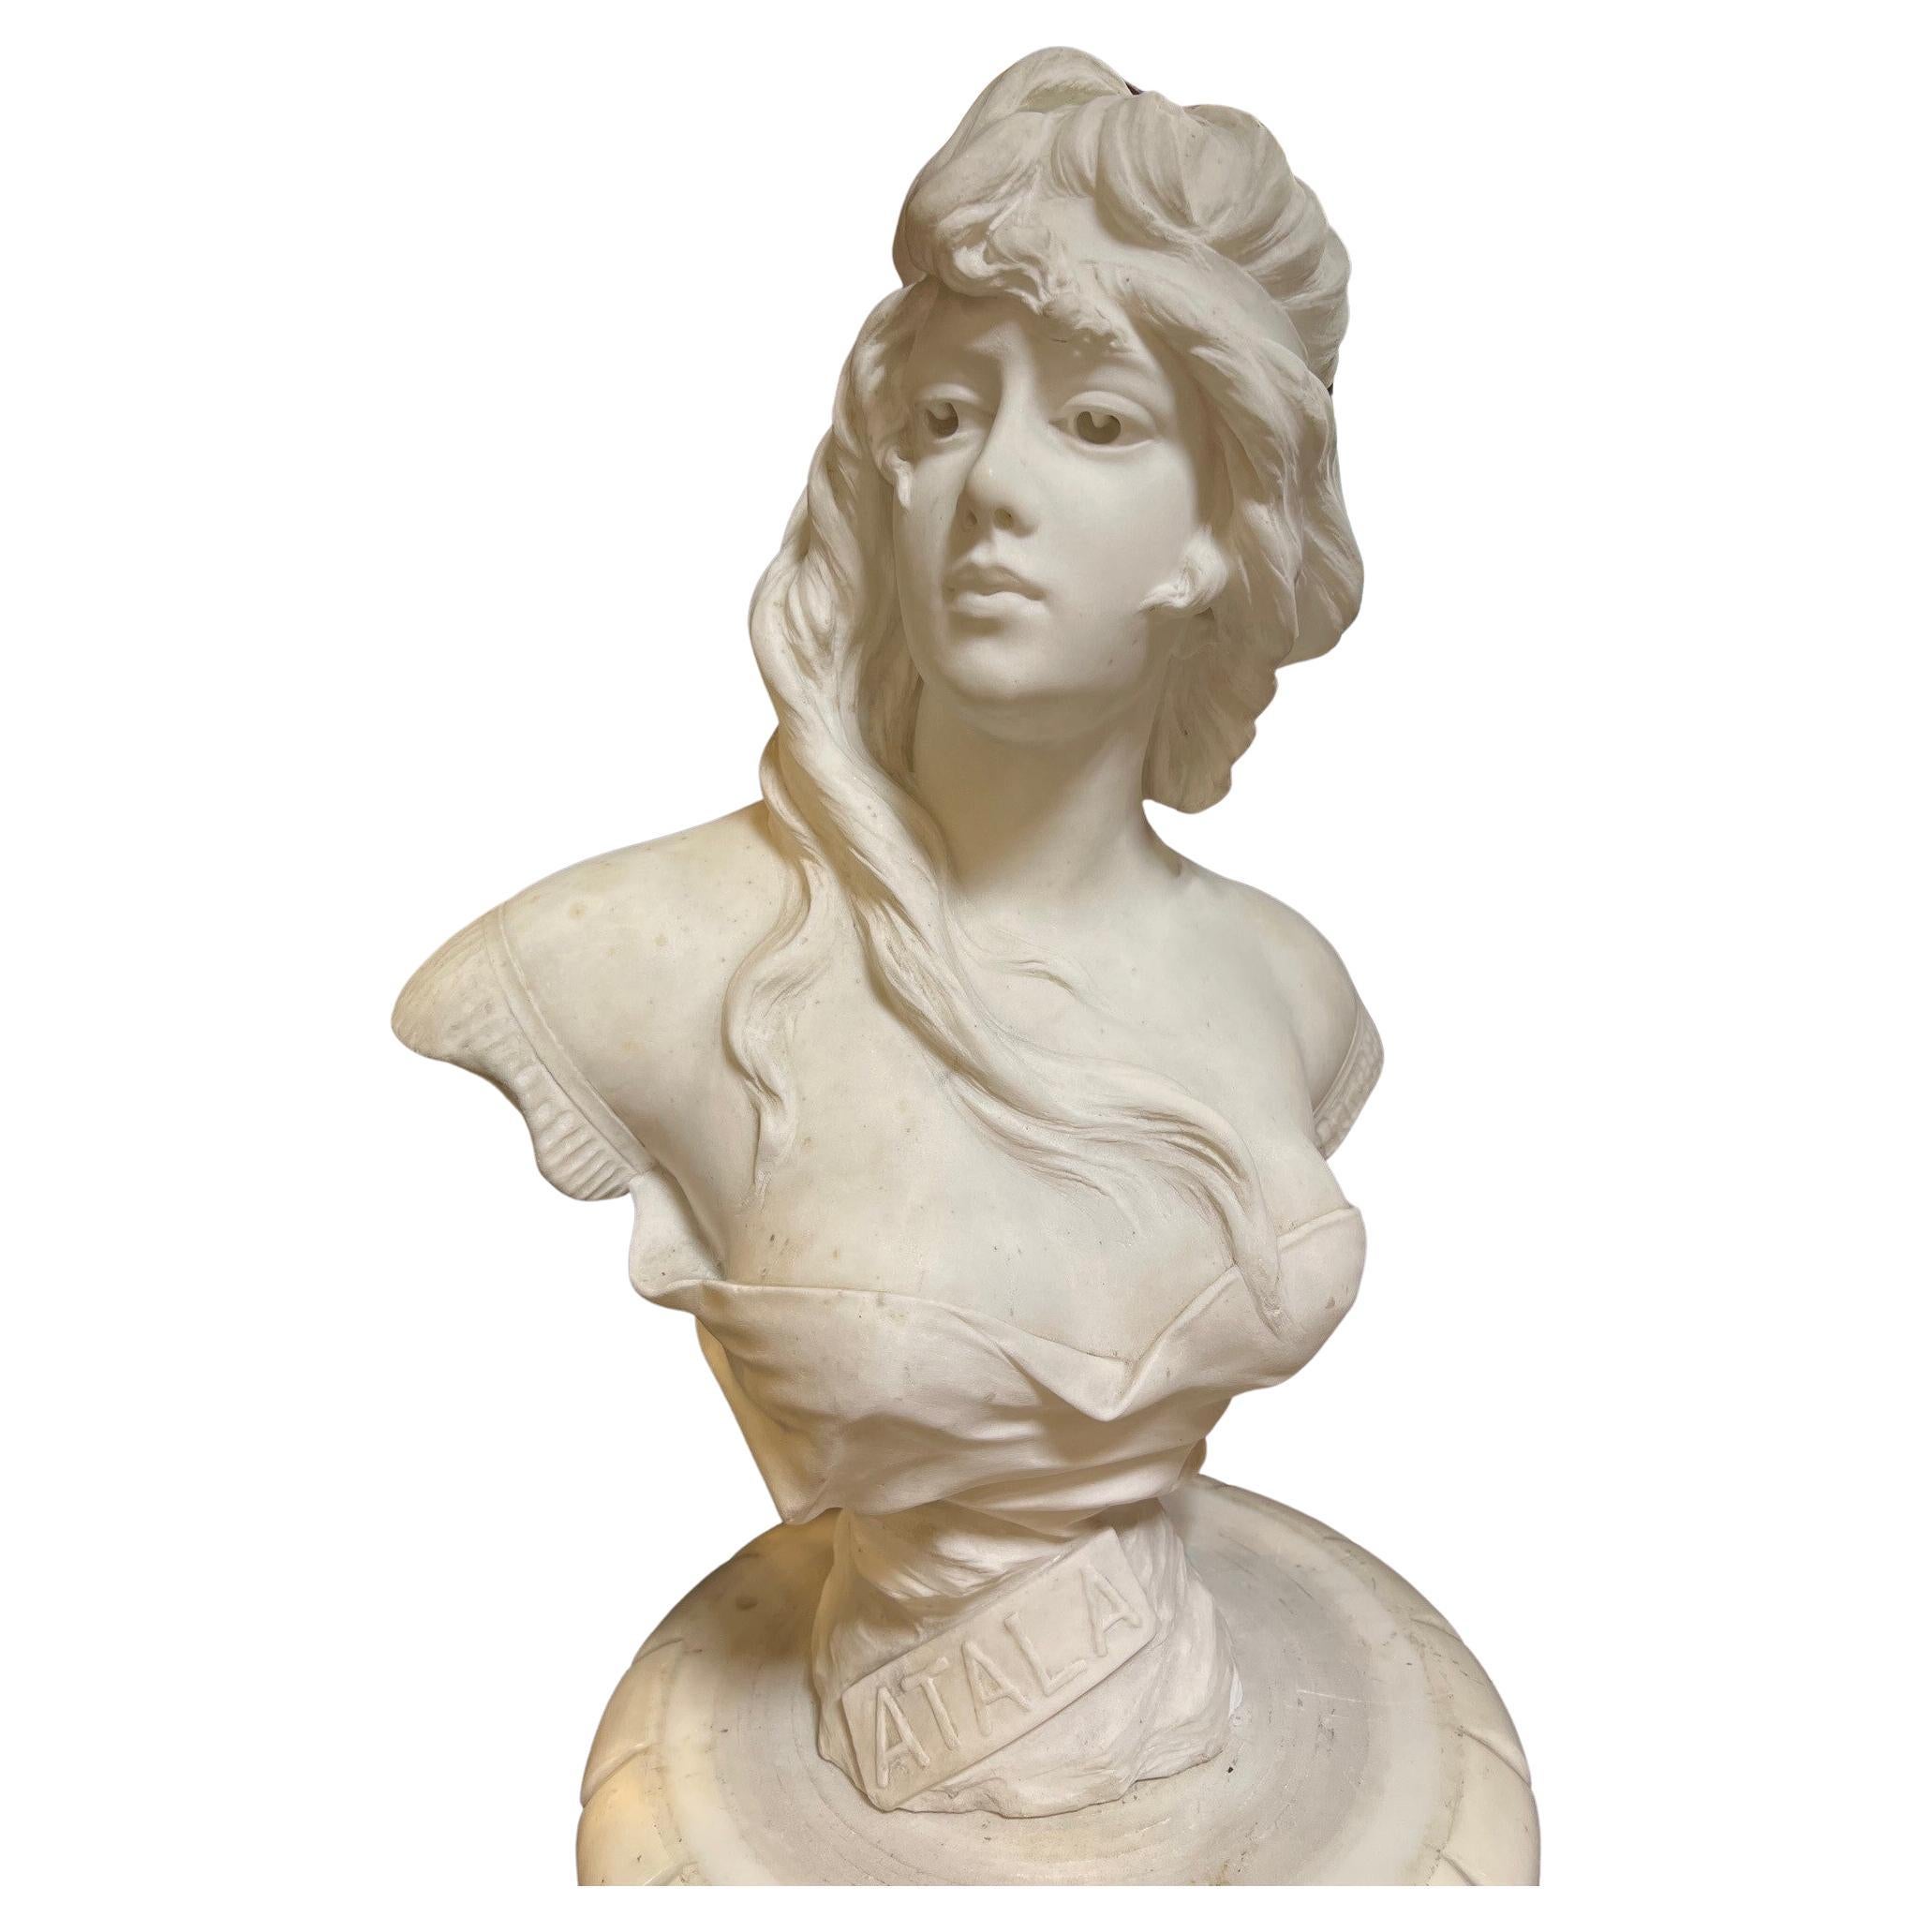  Fin du 19ème siècle Buste en marbre ancien ATALA Signé A. Piazza Carrara  en vente